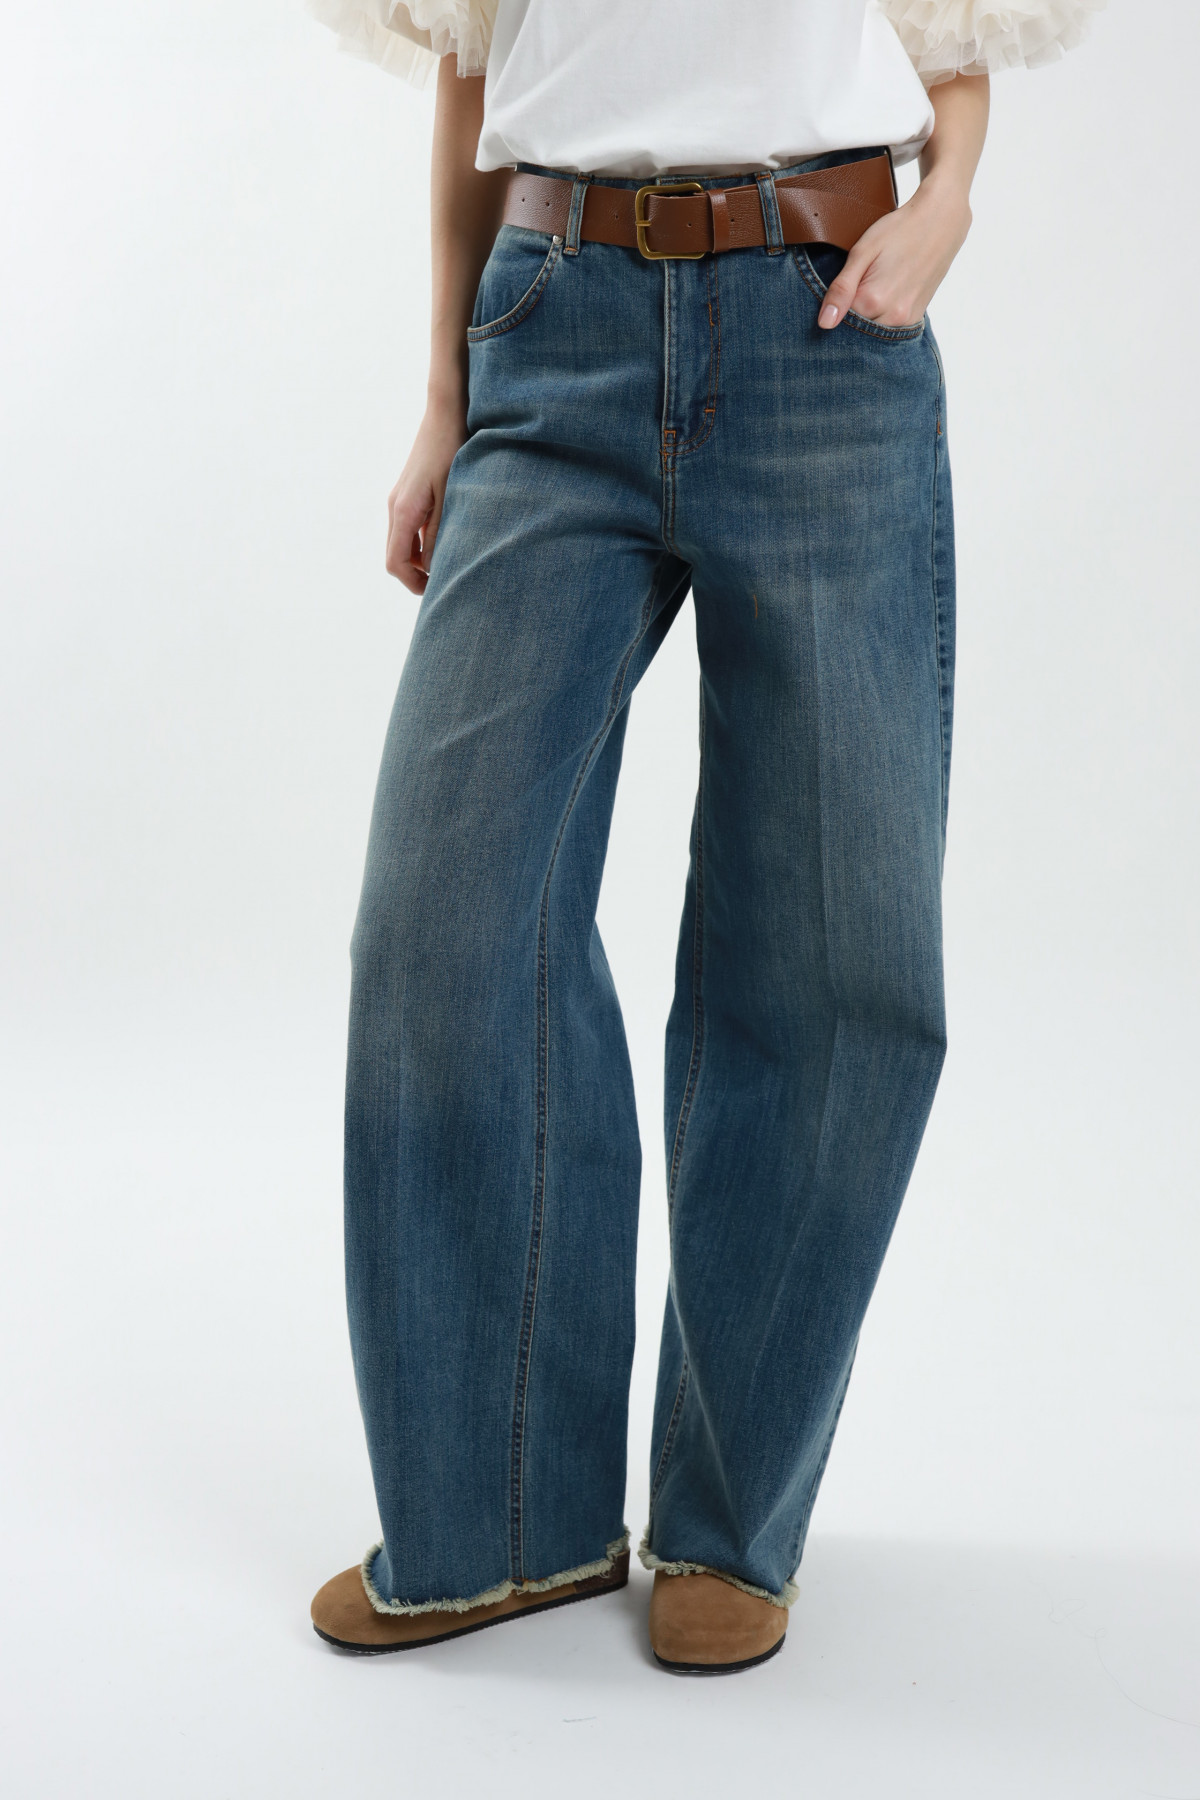 Jeans With Frayed Hem